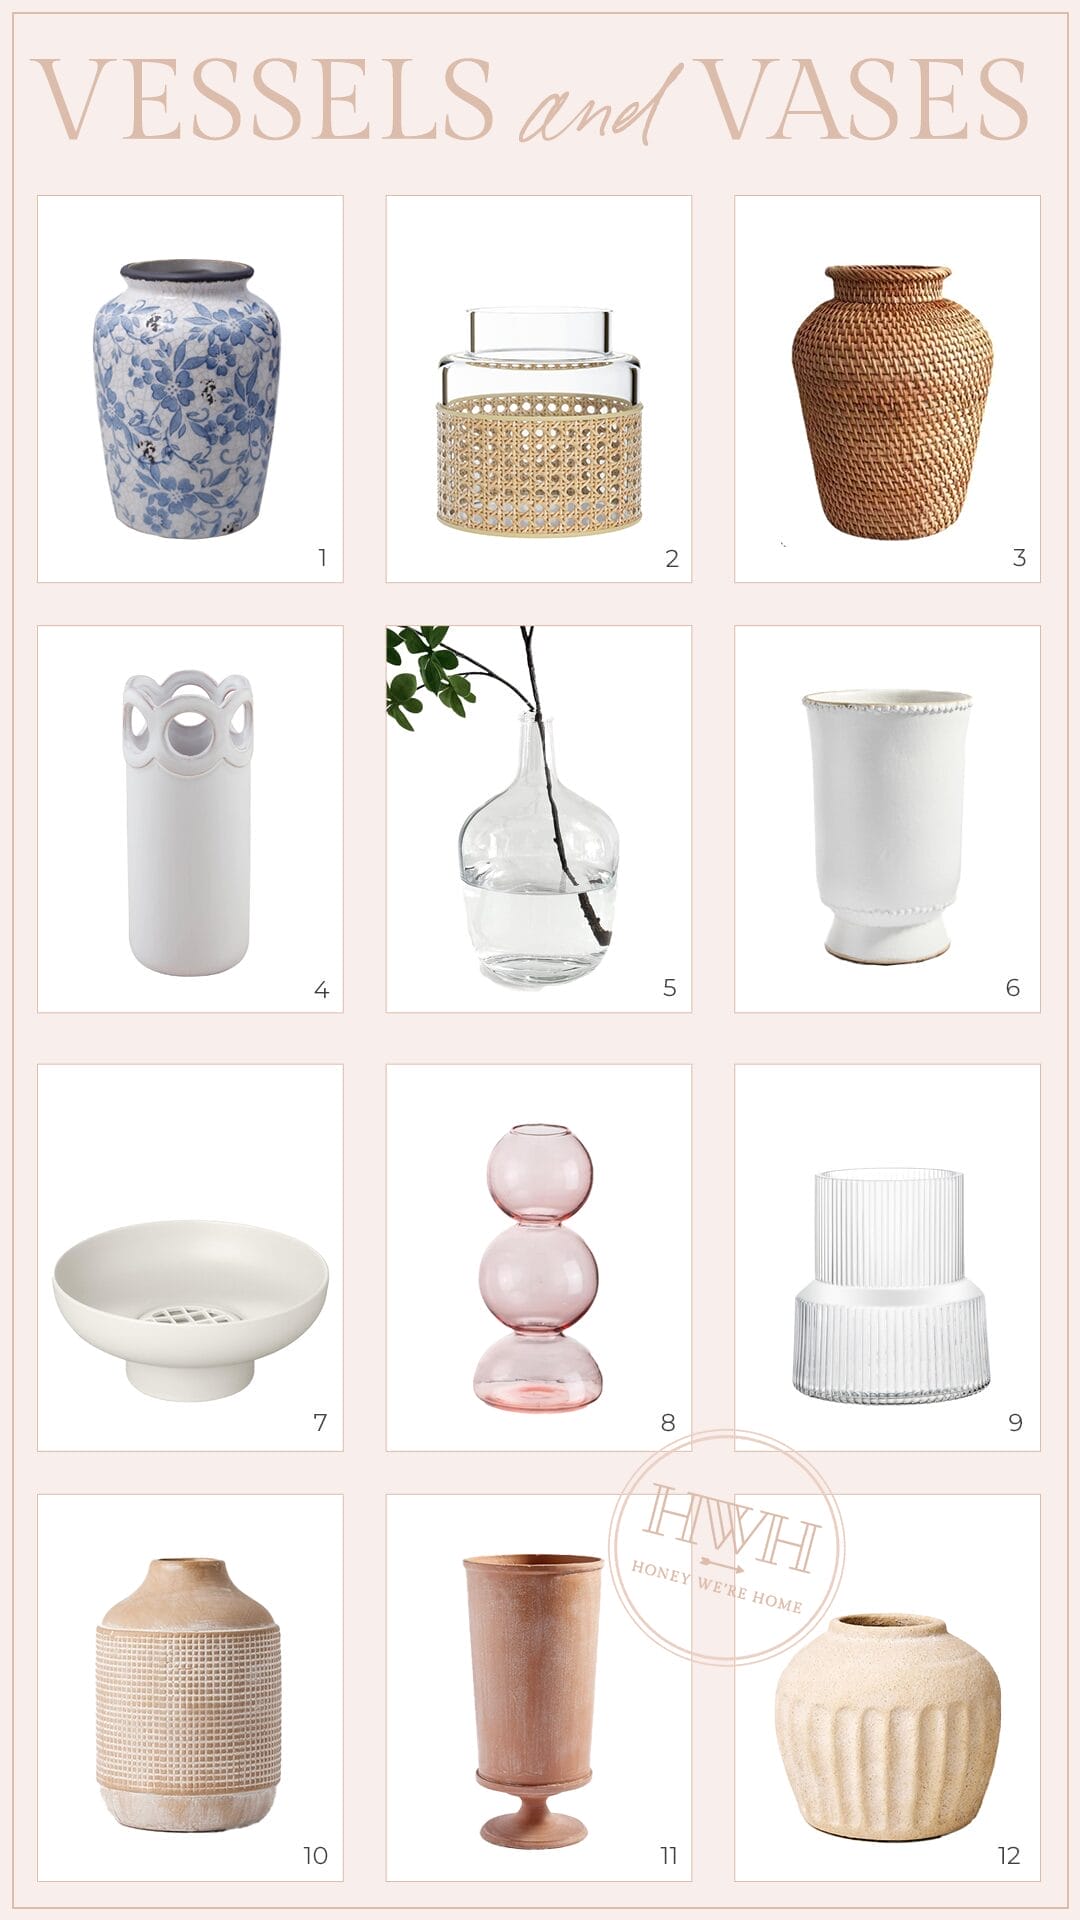 Vessels & Vases
